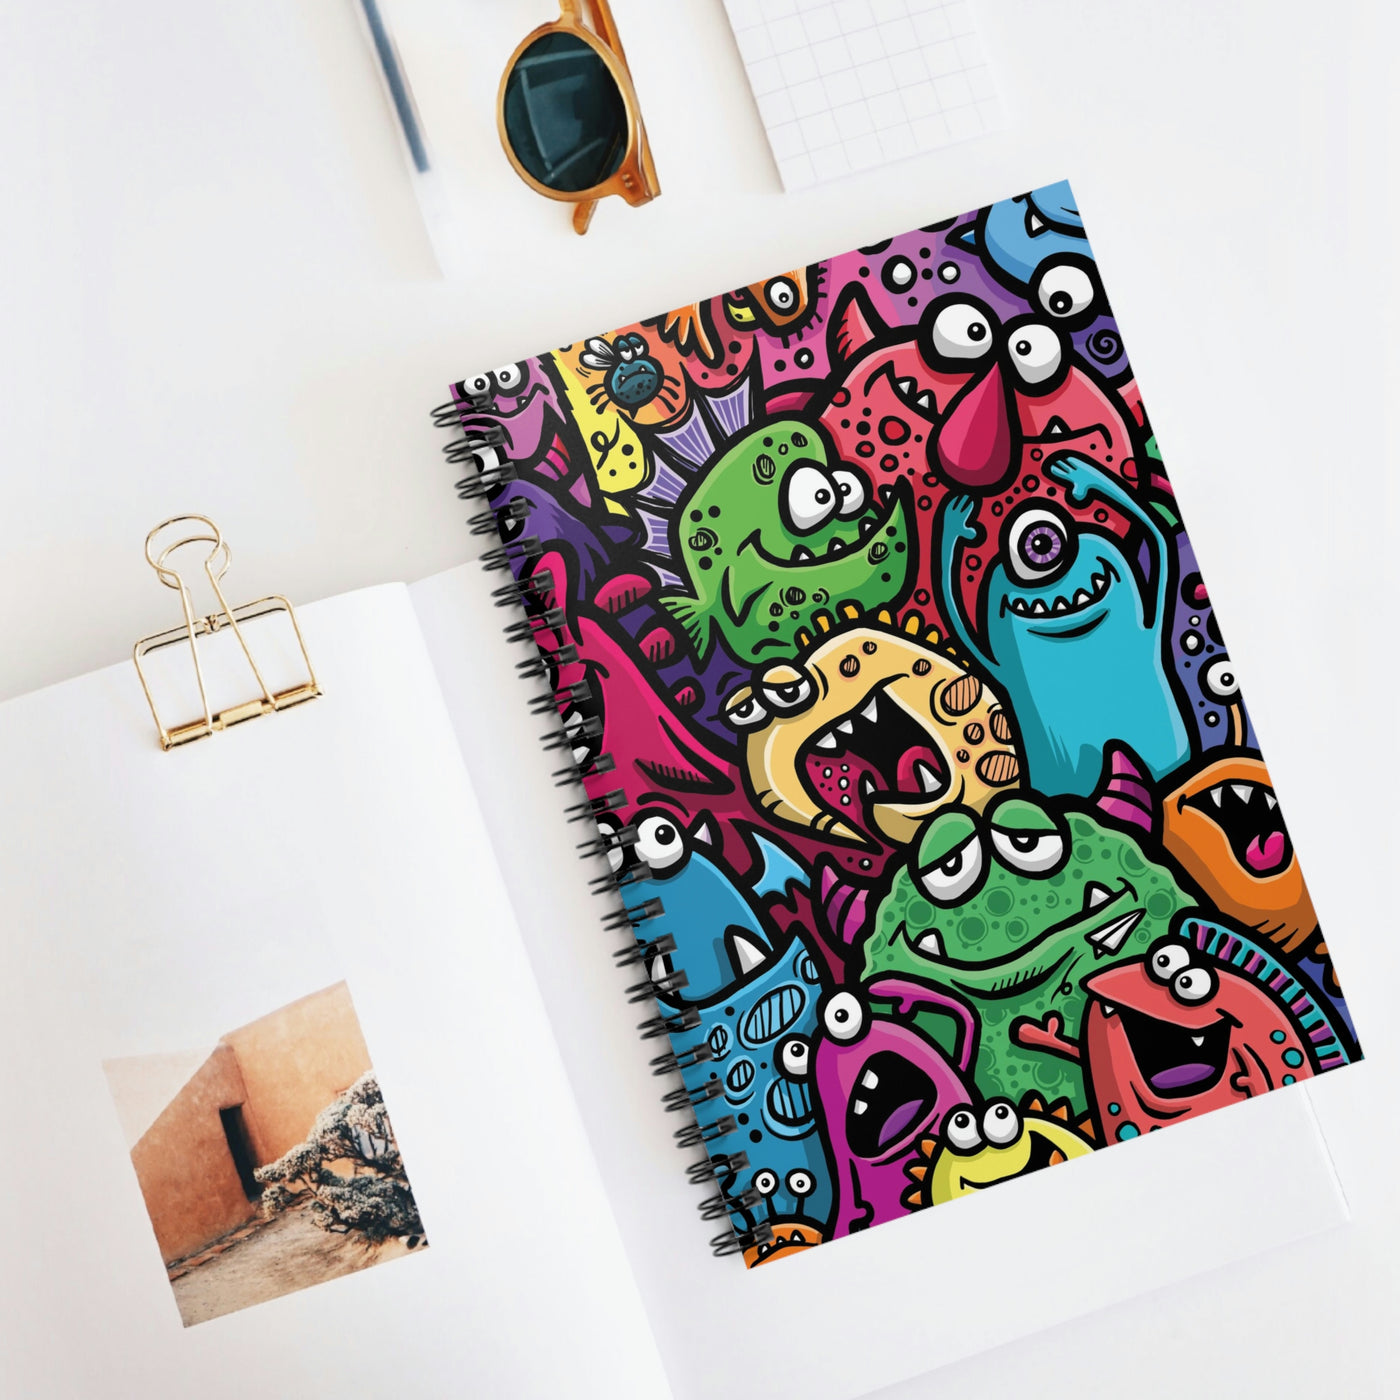 My Little Monsters Spiral Notebook